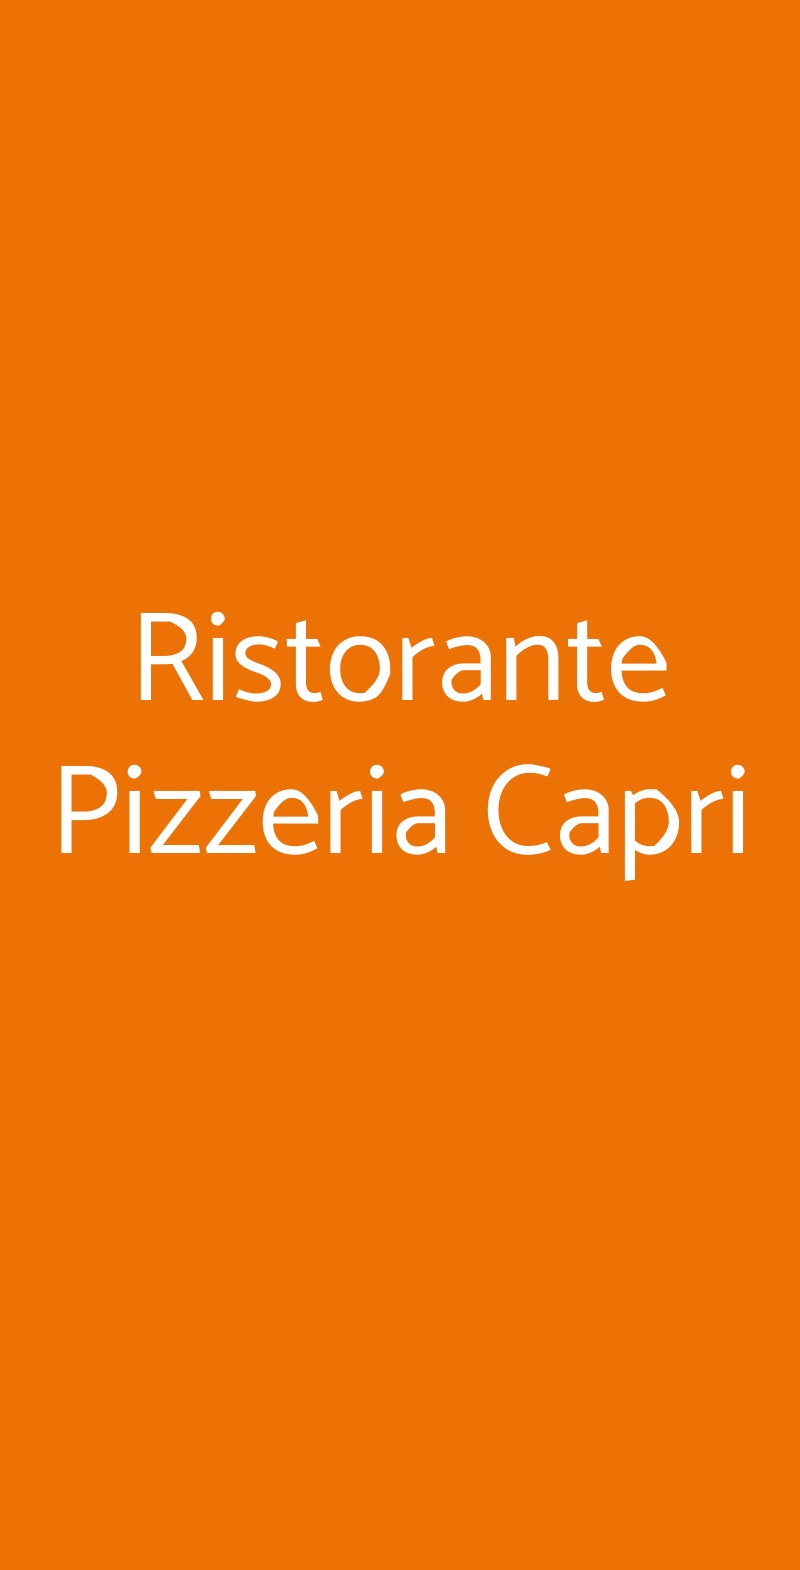 Ristorante Pizzeria Capri Torino menù 1 pagina